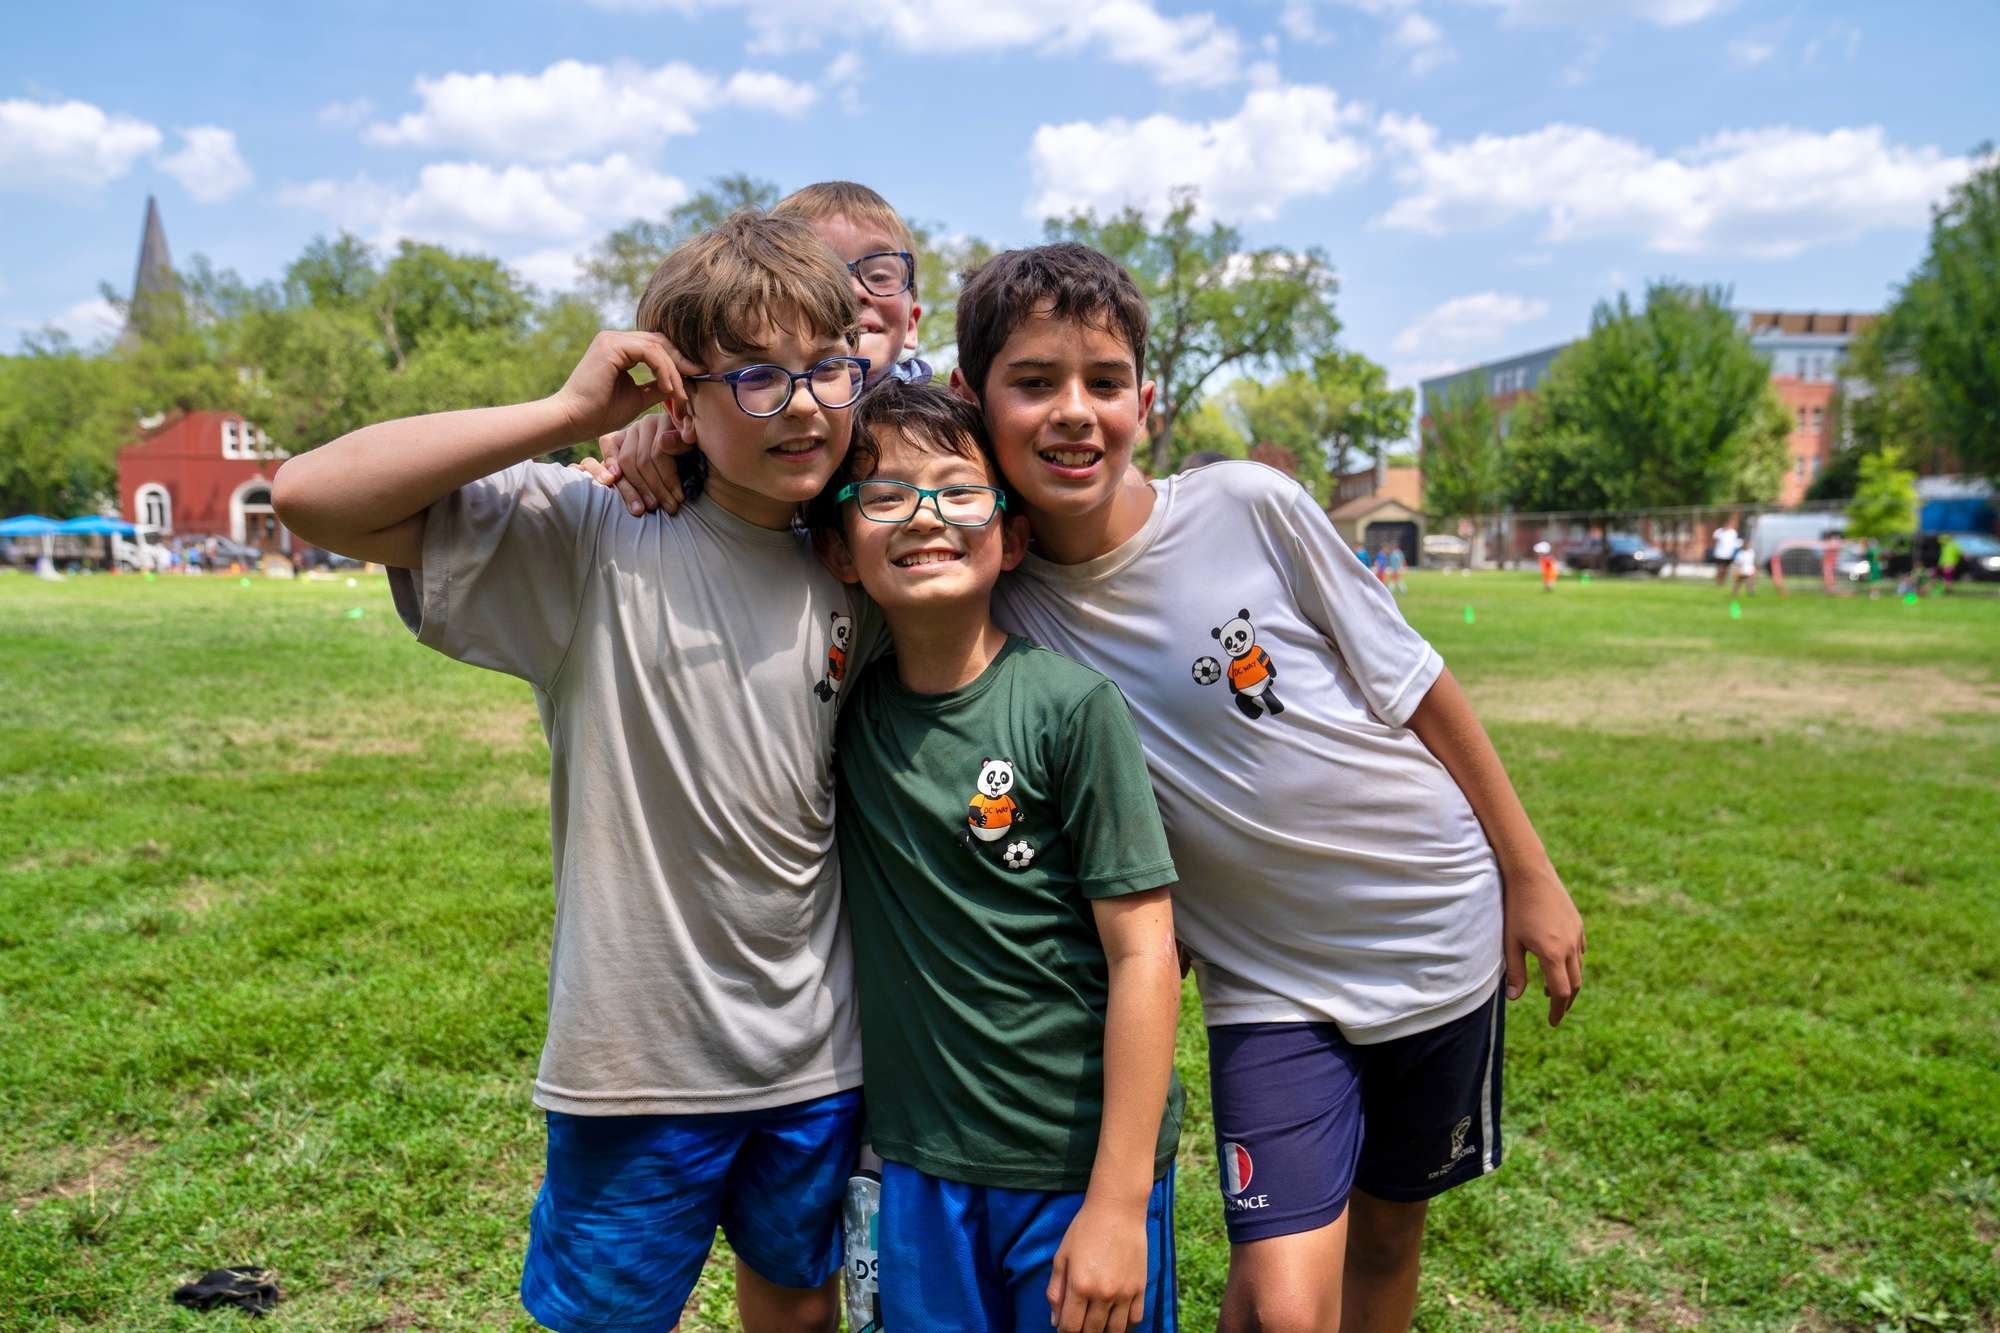 Dc-way-soccer-club-for-kids-in-washington-dc-summer-camp-at-tyler-elementary-school- 0051.jpg